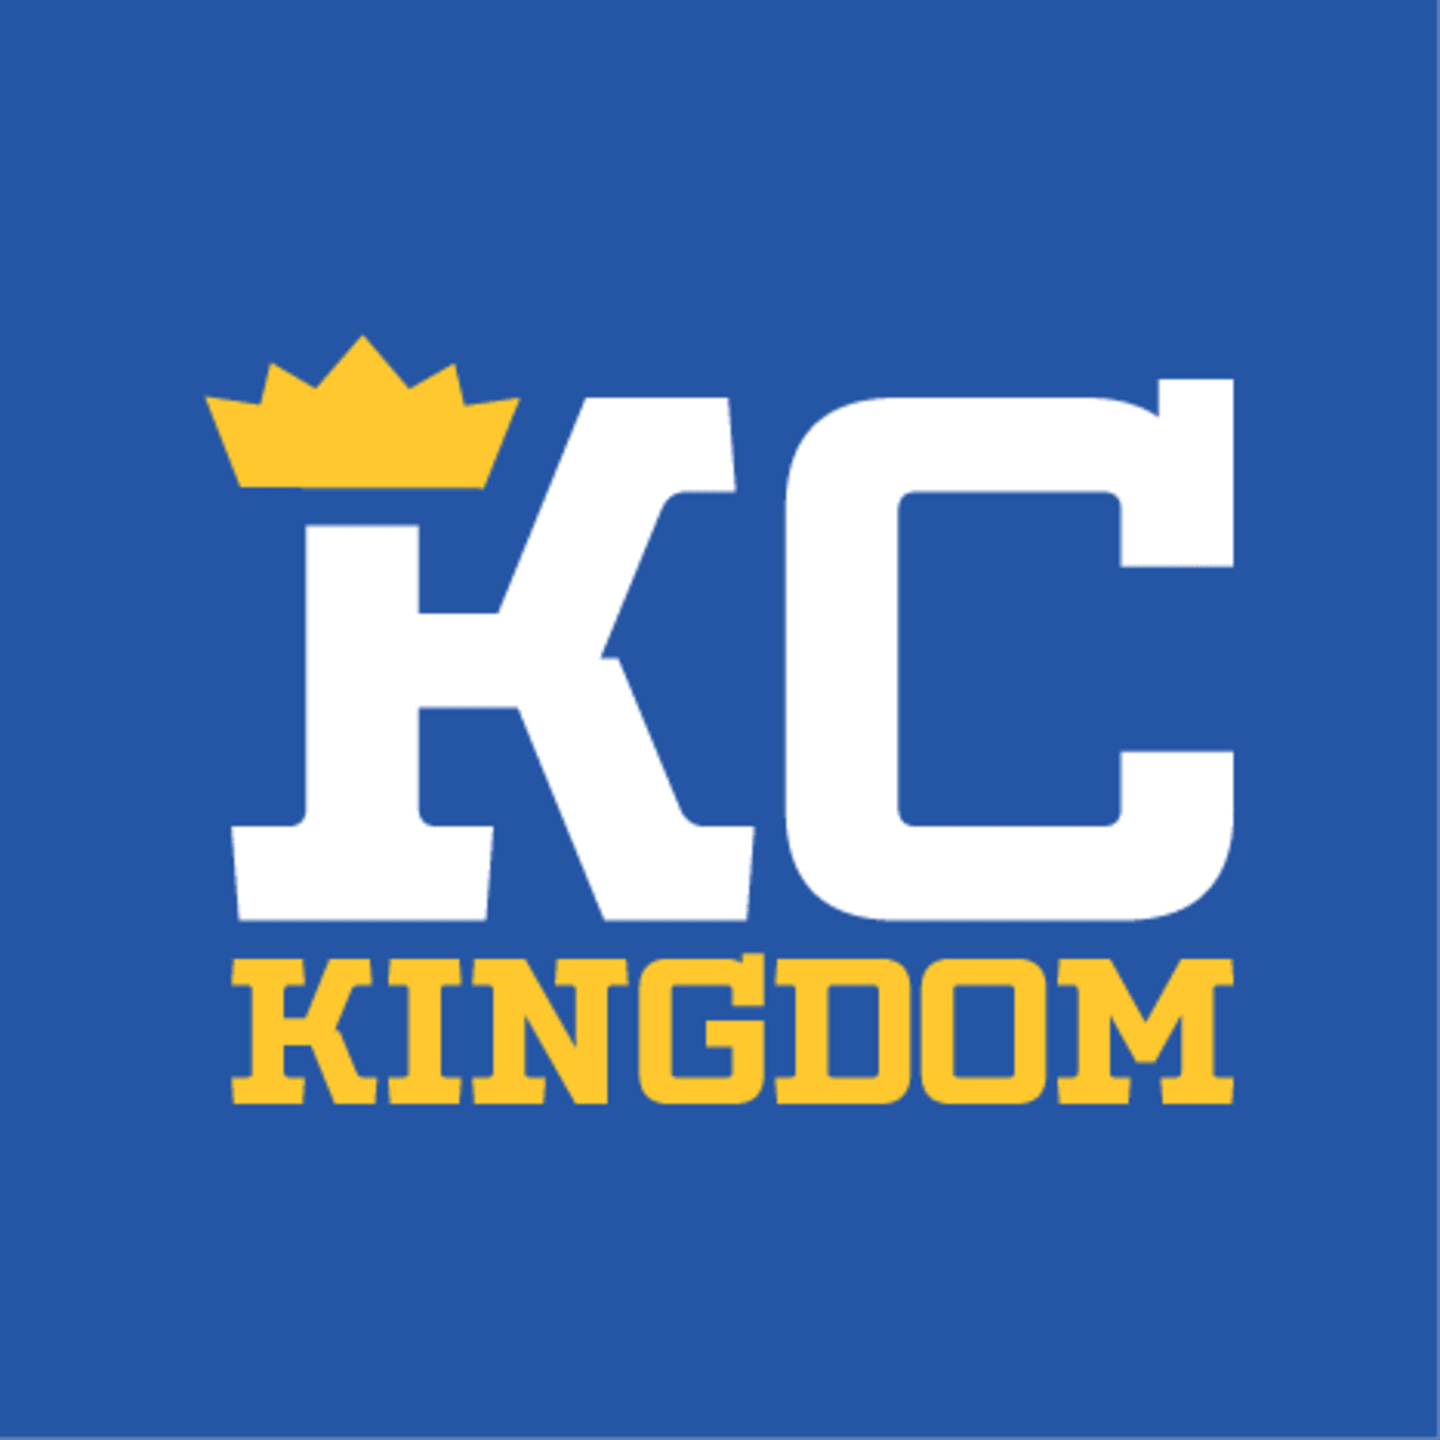 Kansas City Chiefs  News, Updates, Rumors, and more - KC Kingdom